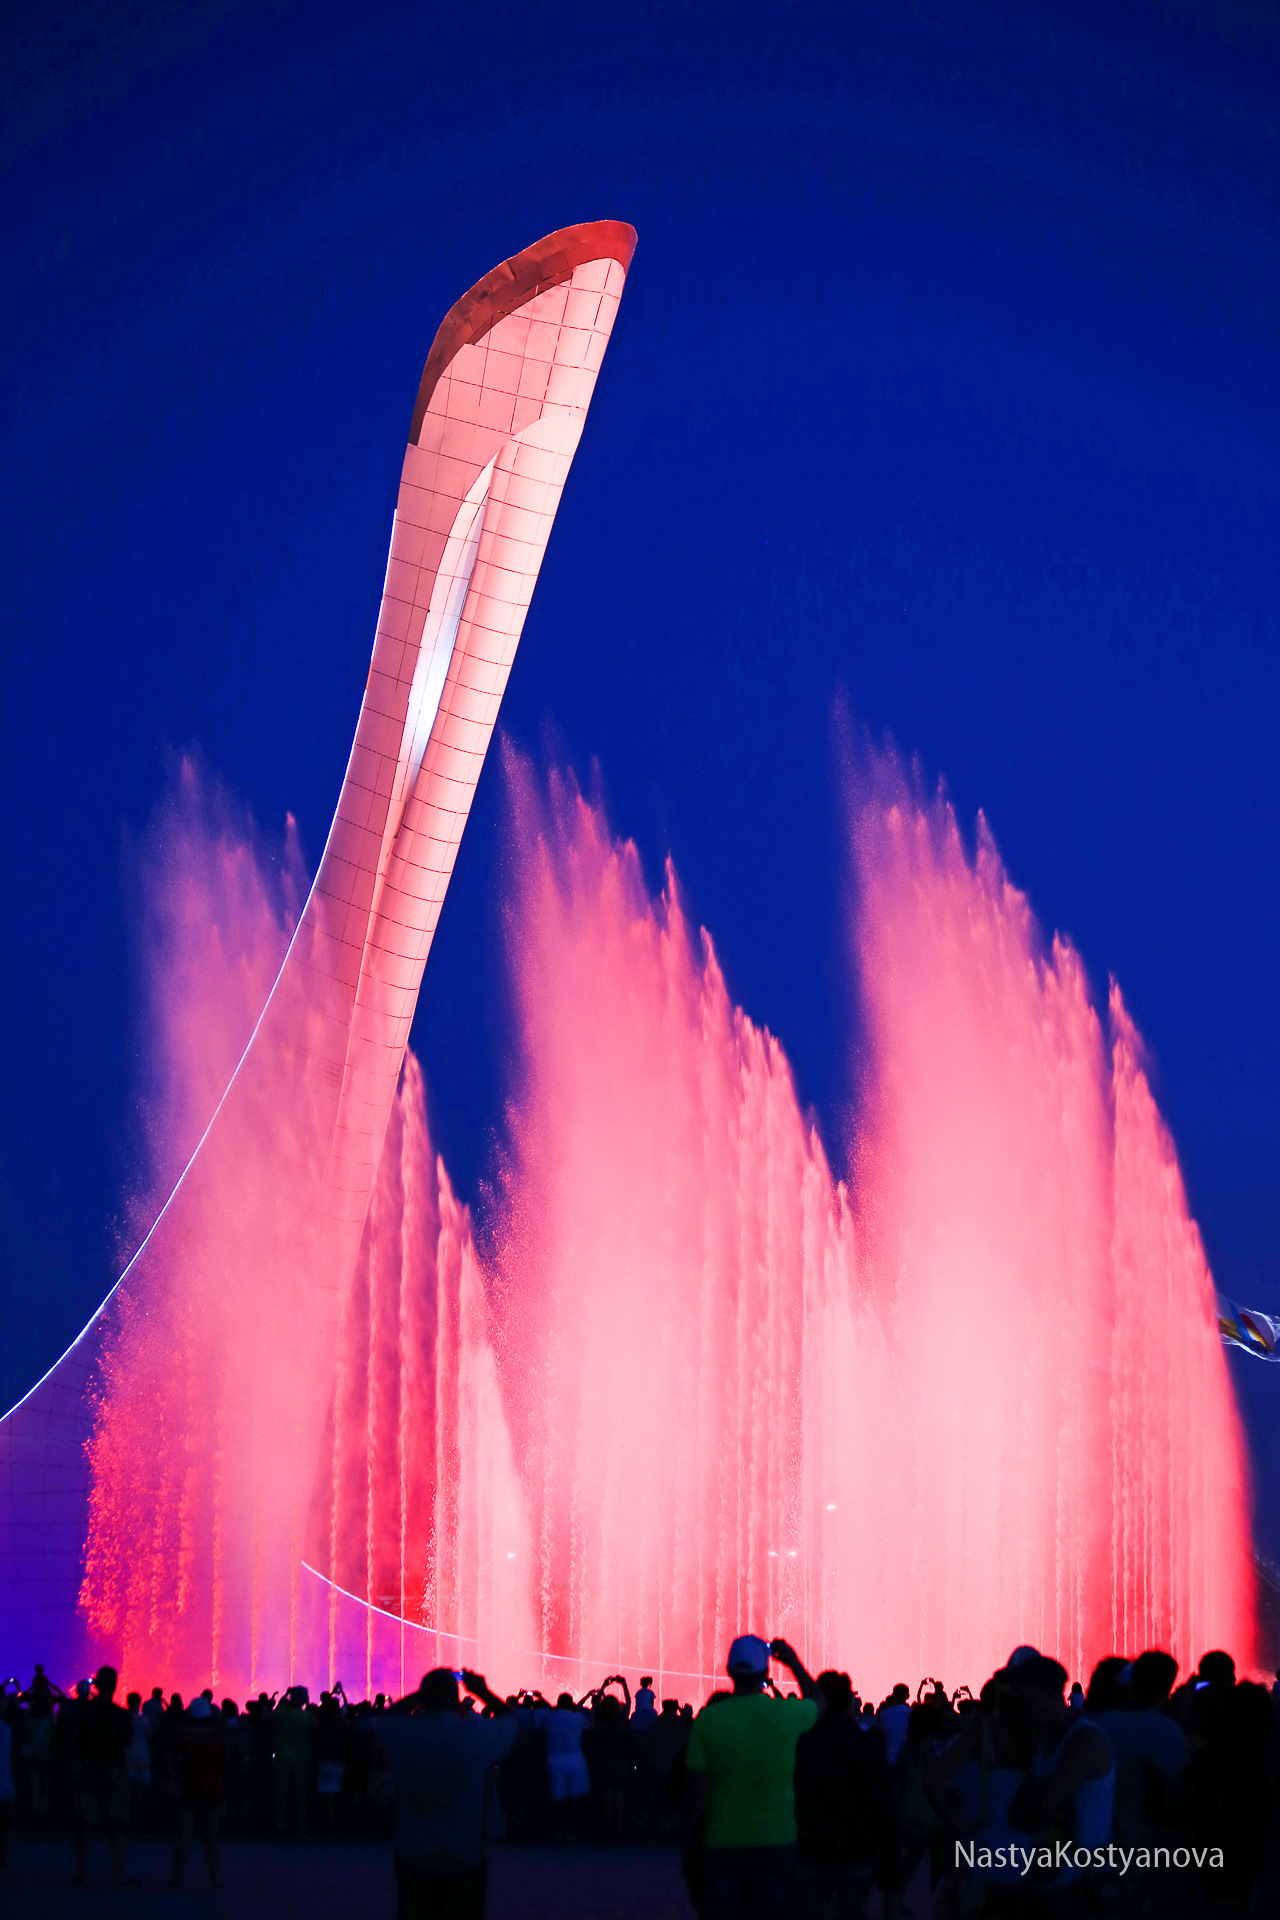 Поющий фонтан сочи олимпийский парк расписание. Поющие фонтаны Сочи Олимпийский парк. Музыкальный фонтан в Адлере Олимпийский парк. Сочи парк фонтан. Шоу поющих фонтанов в Олимпийском парке Сочи.